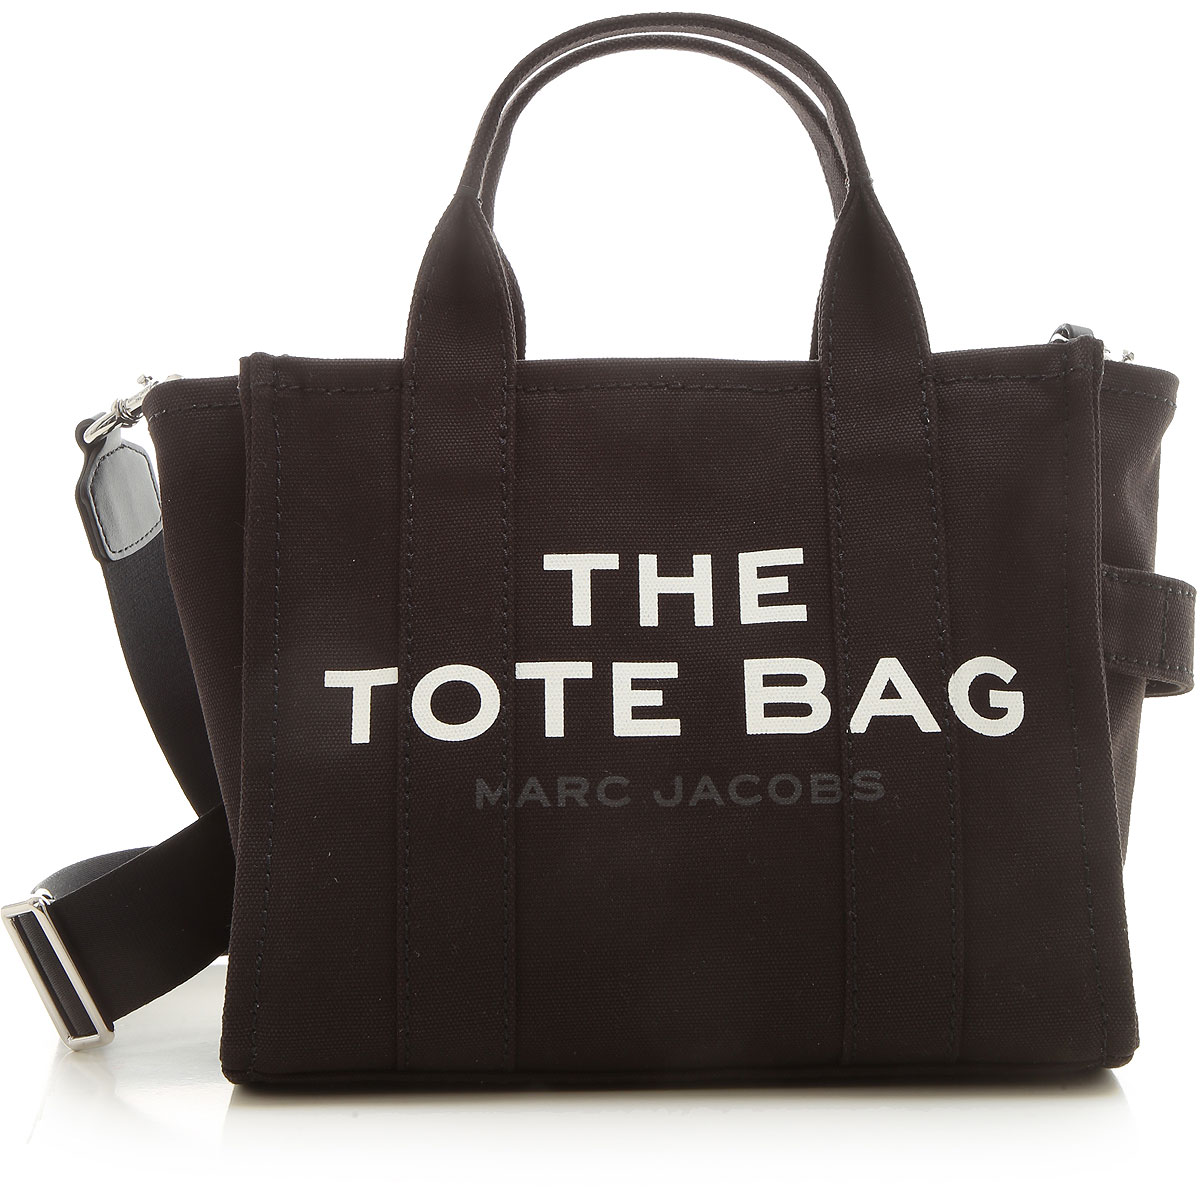 Handbags Marc Jacobs, Style code: m0016493-001-